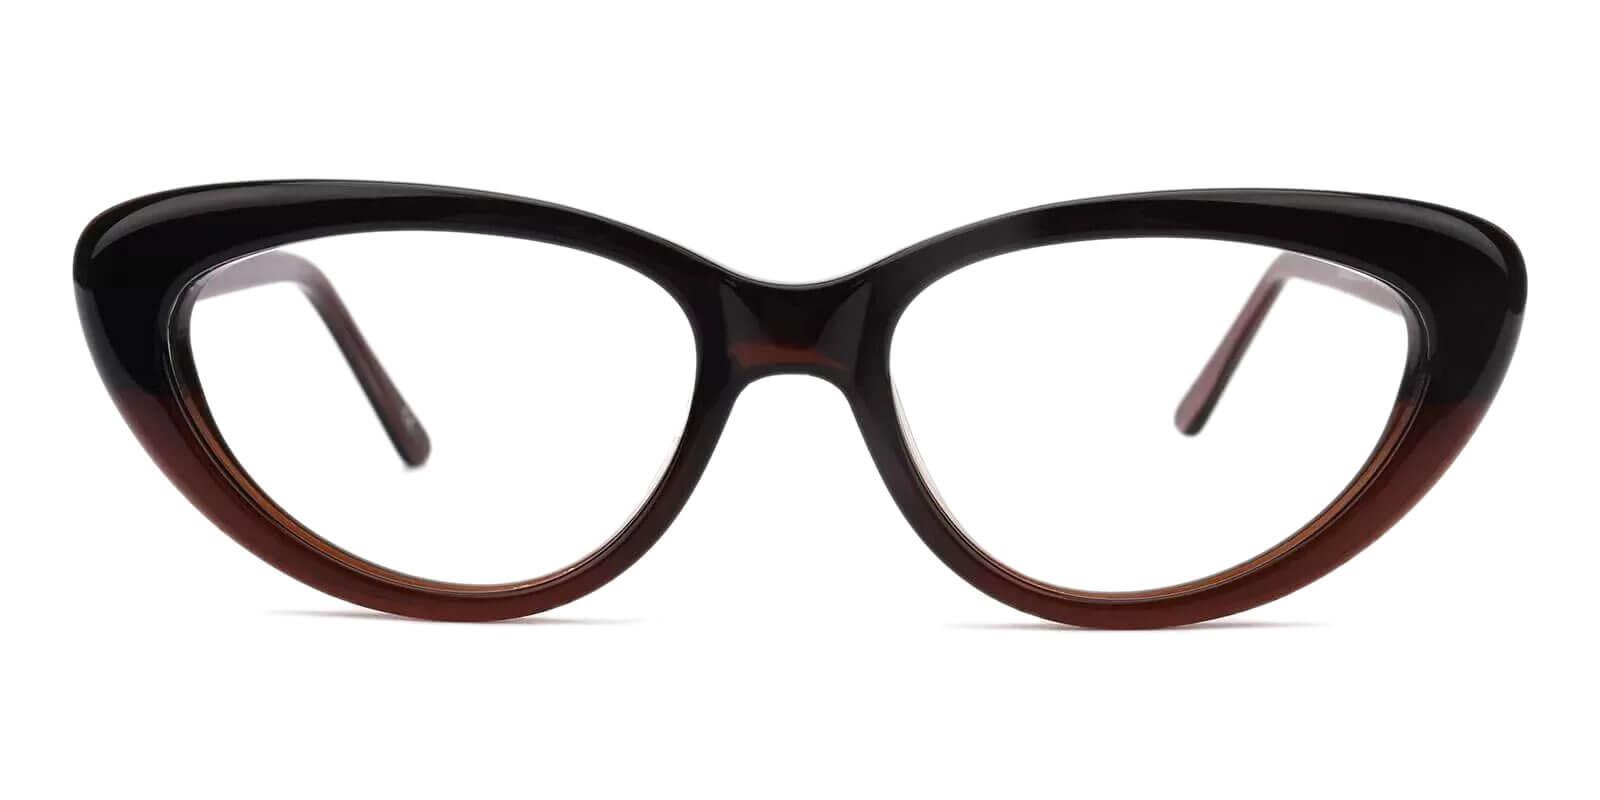 Stella Brown Acetate Eyeglasses , SpringHinges , UniversalBridgeFit Frames from ABBE Glasses